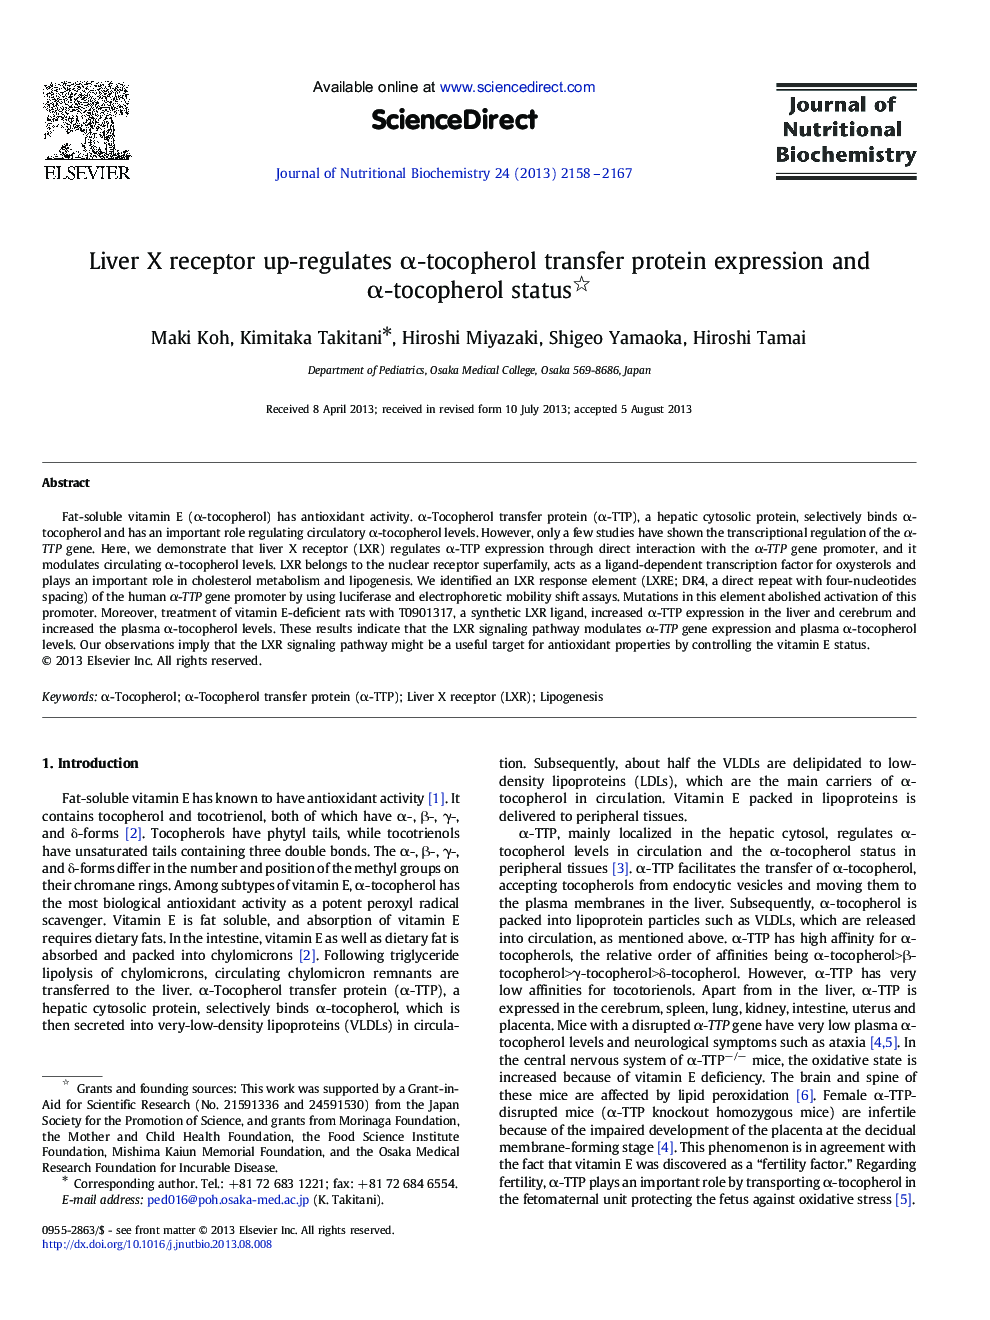 Liver X receptor up-regulates Î±-tocopherol transfer protein expression and Î±-tocopherol status